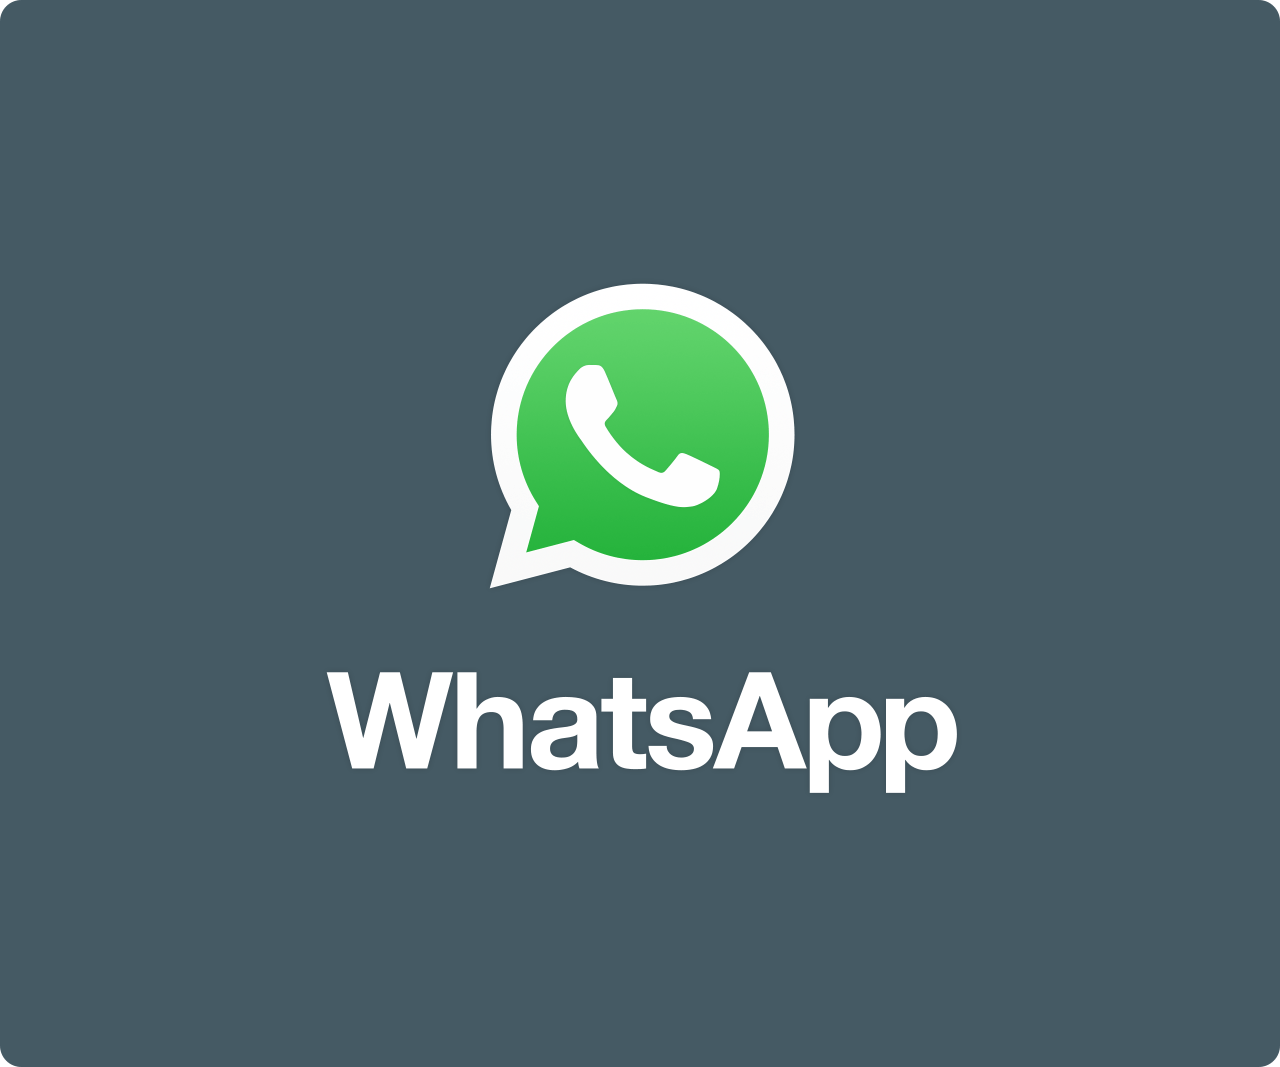 White and Green Phone Logo - WhatsApp Brand Resources